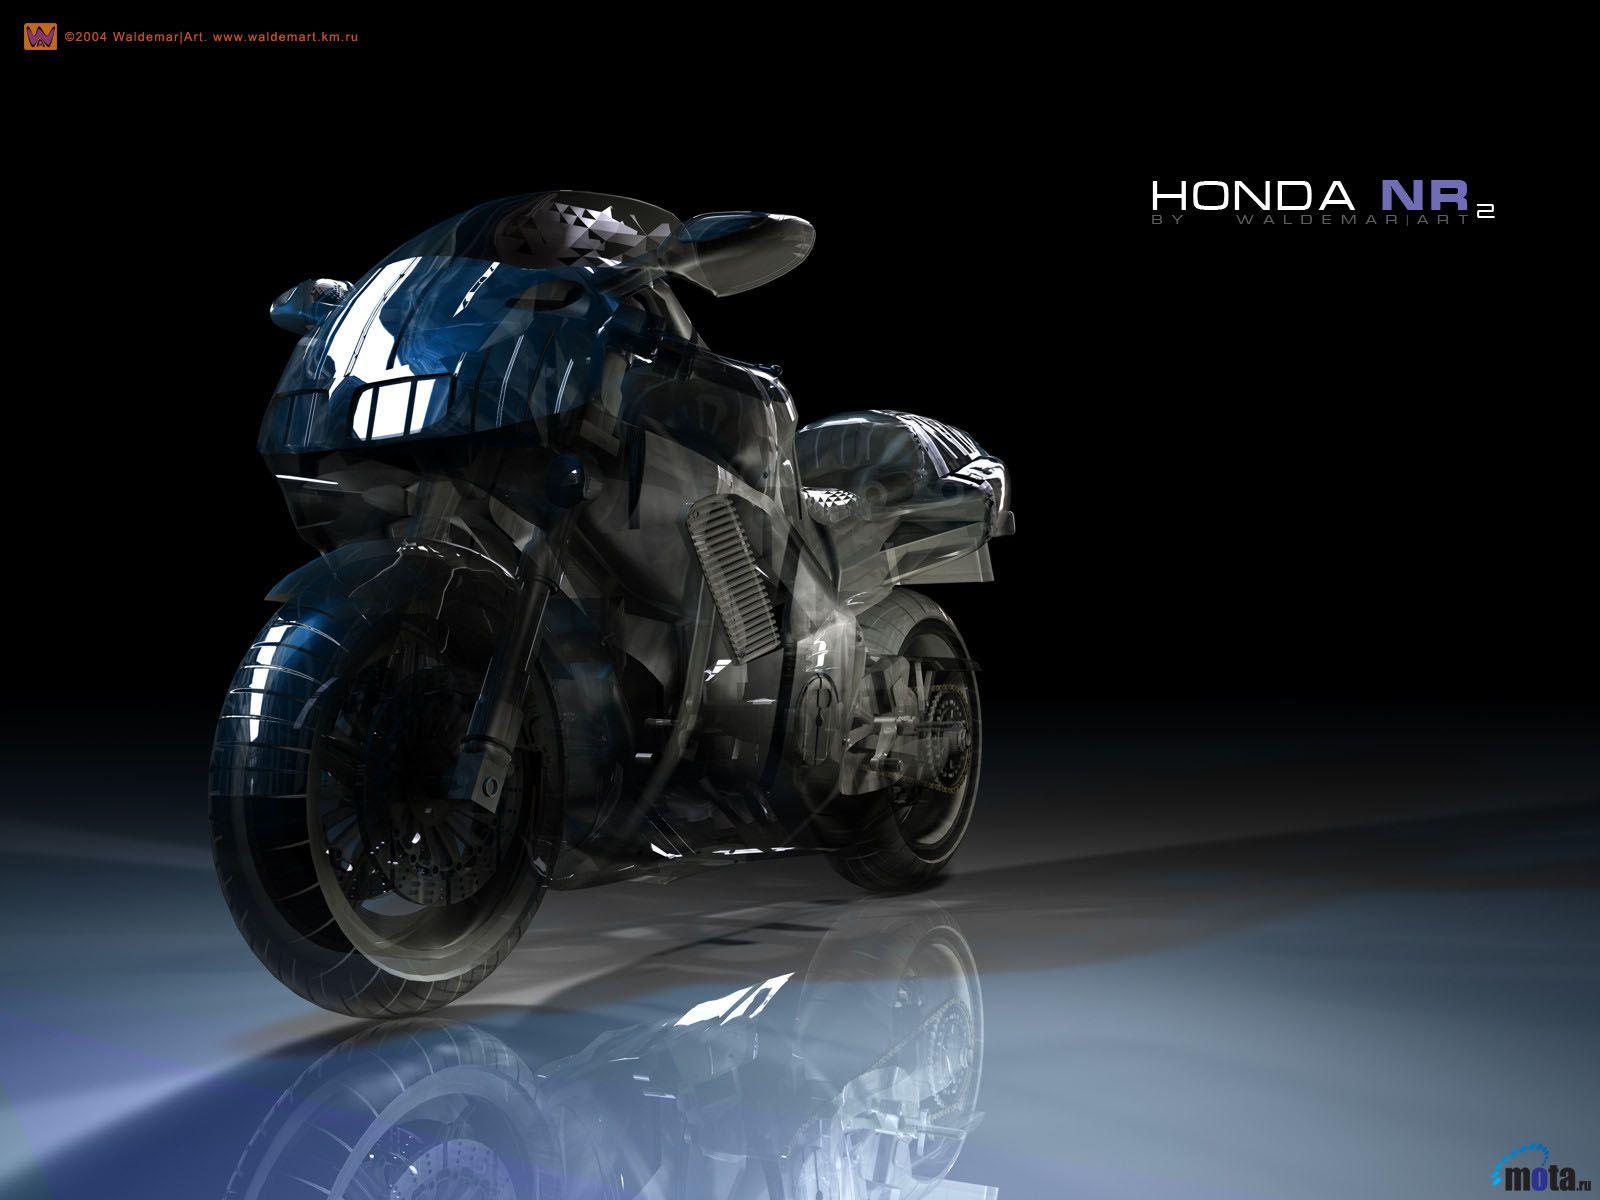 Honda Motorcycle Wallpapers Top Free Honda Motorcycle Backgrounds Wallpaperaccess 0066